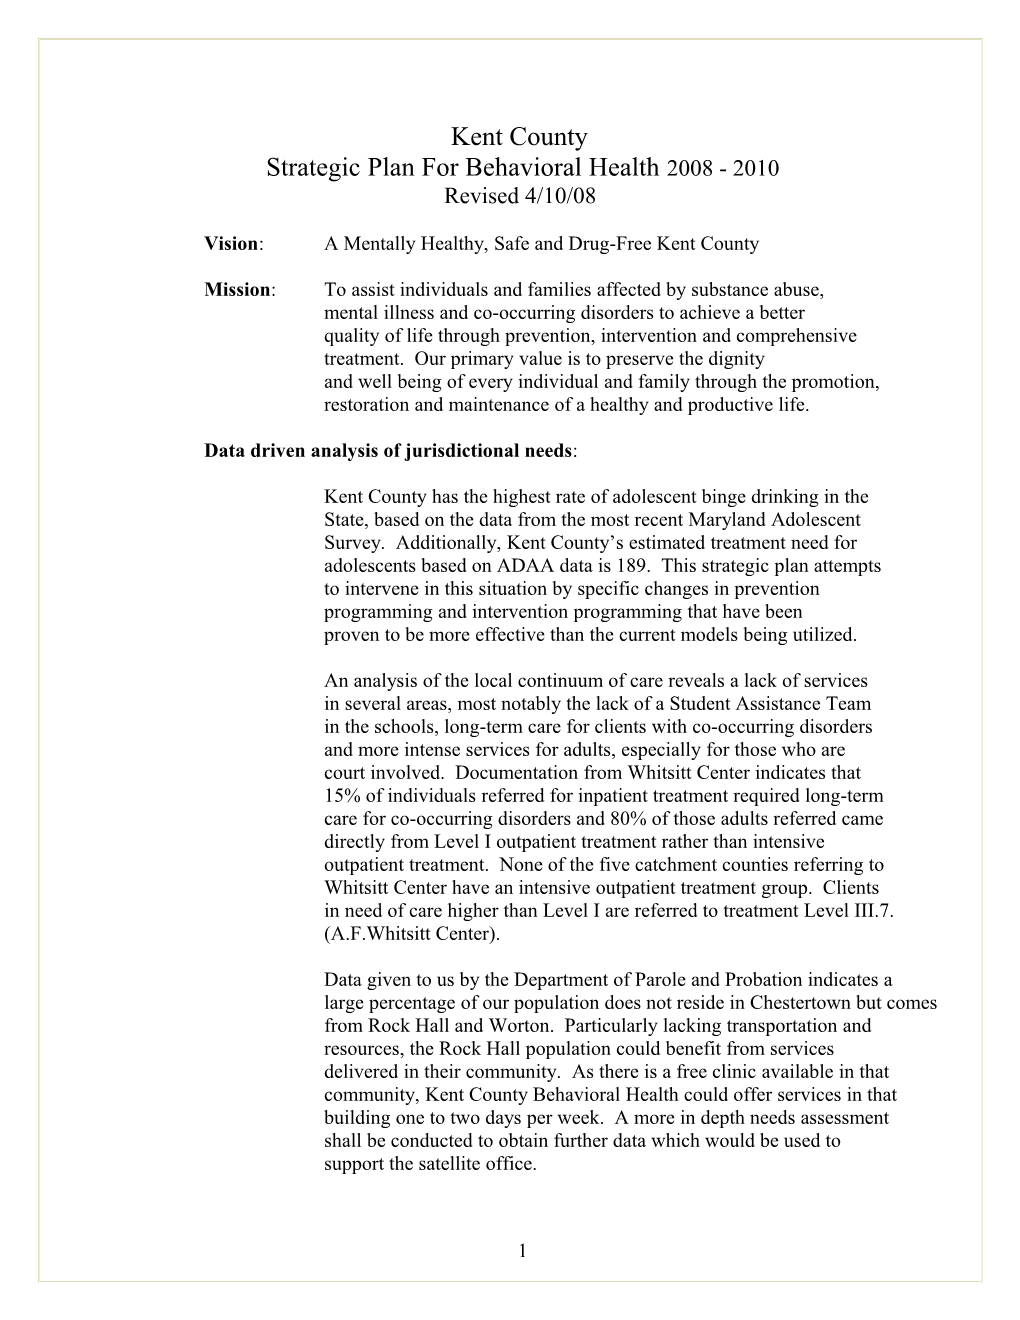 Strategic Plan for Behavioral Health2008 - 2010